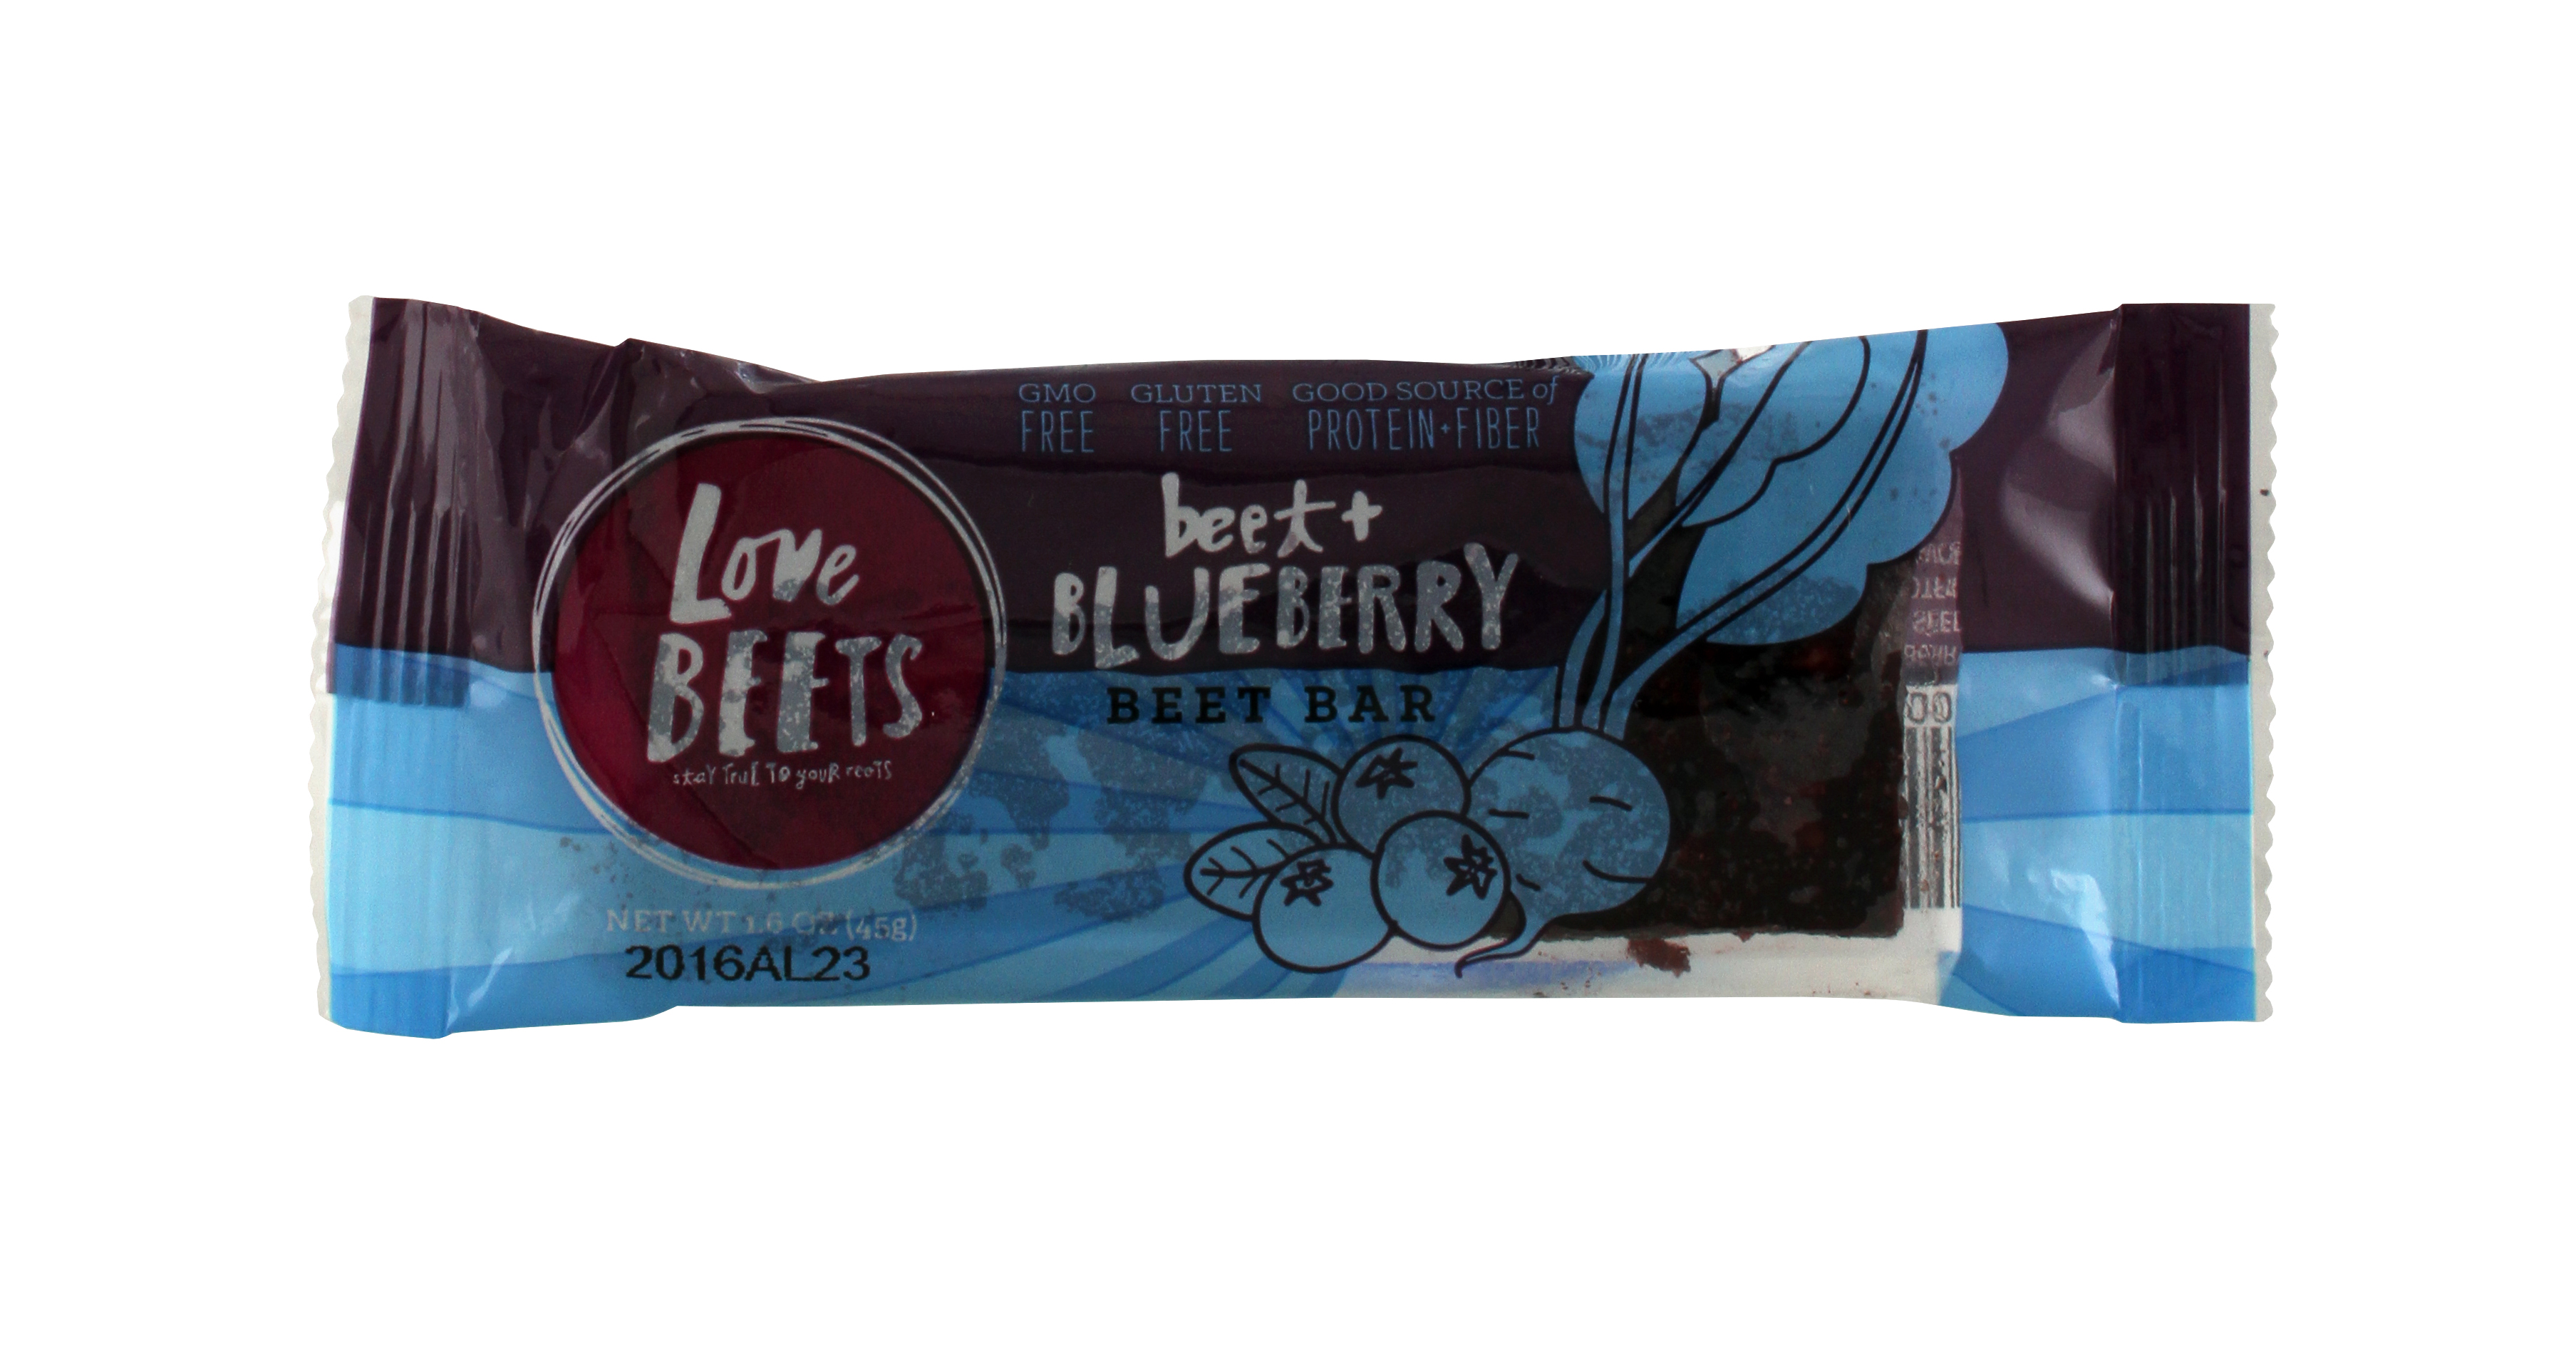 Beet & Blueberry